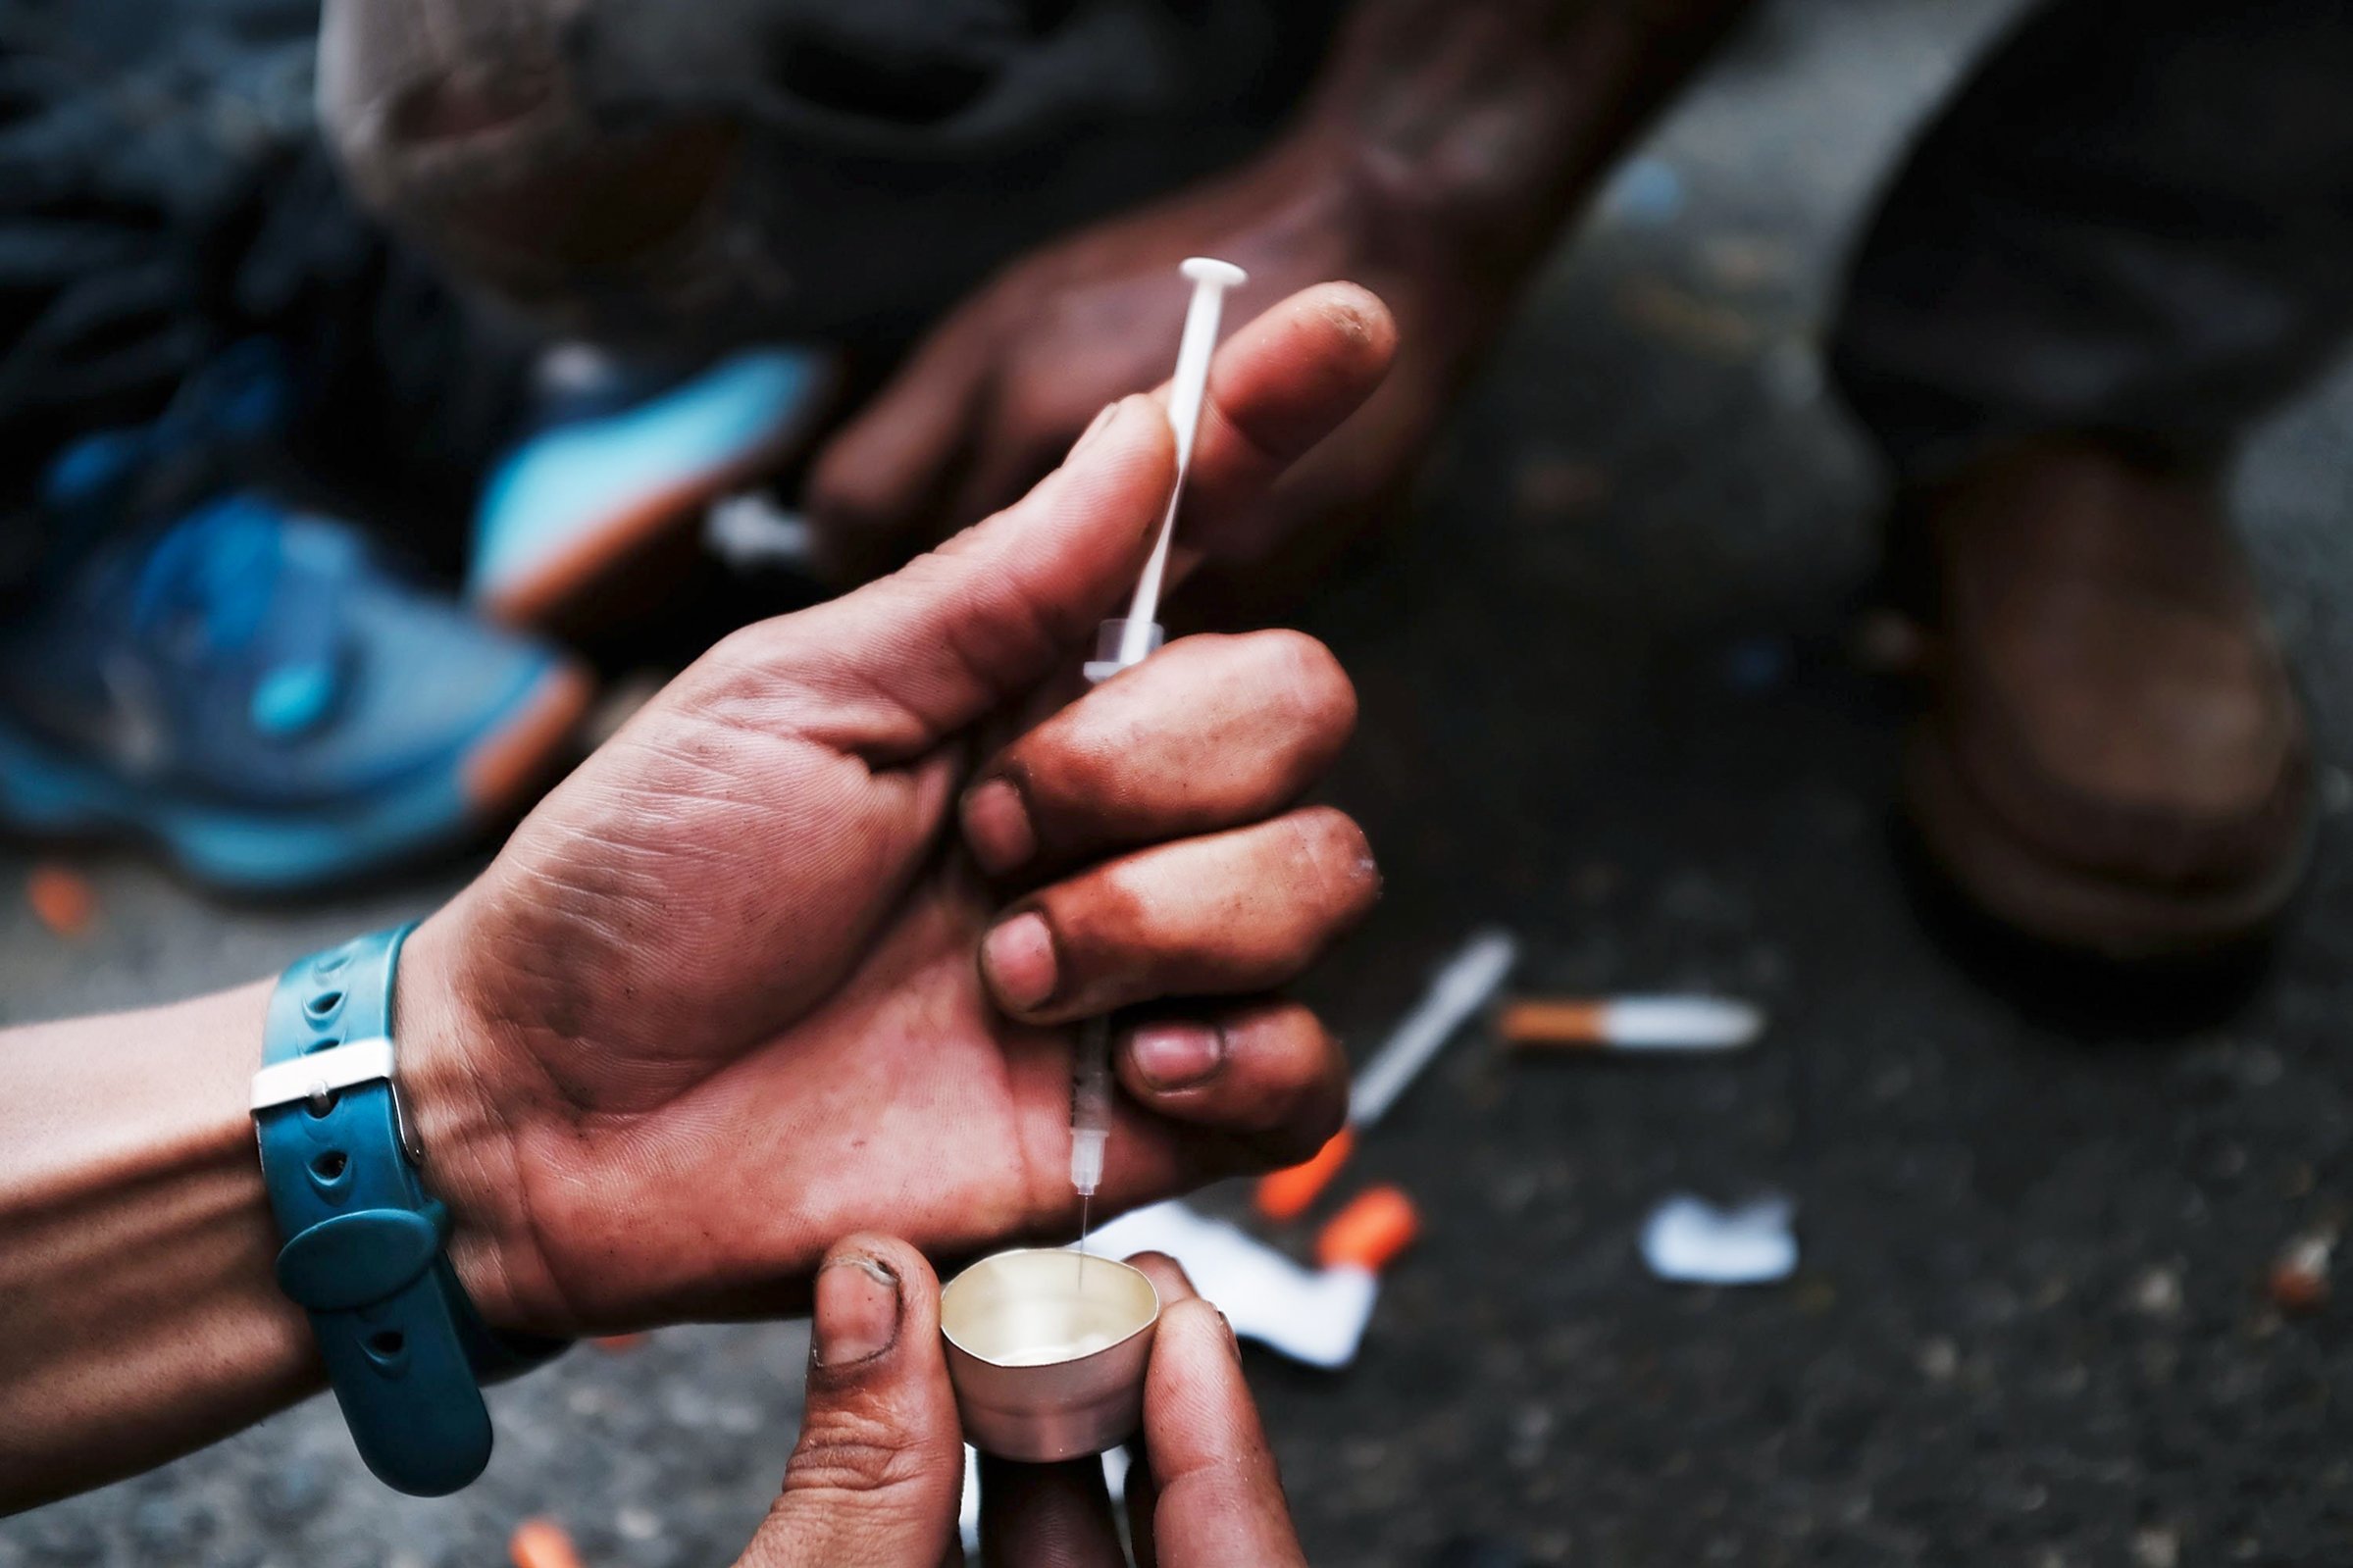 A user prepares to take heroin on a New York City street